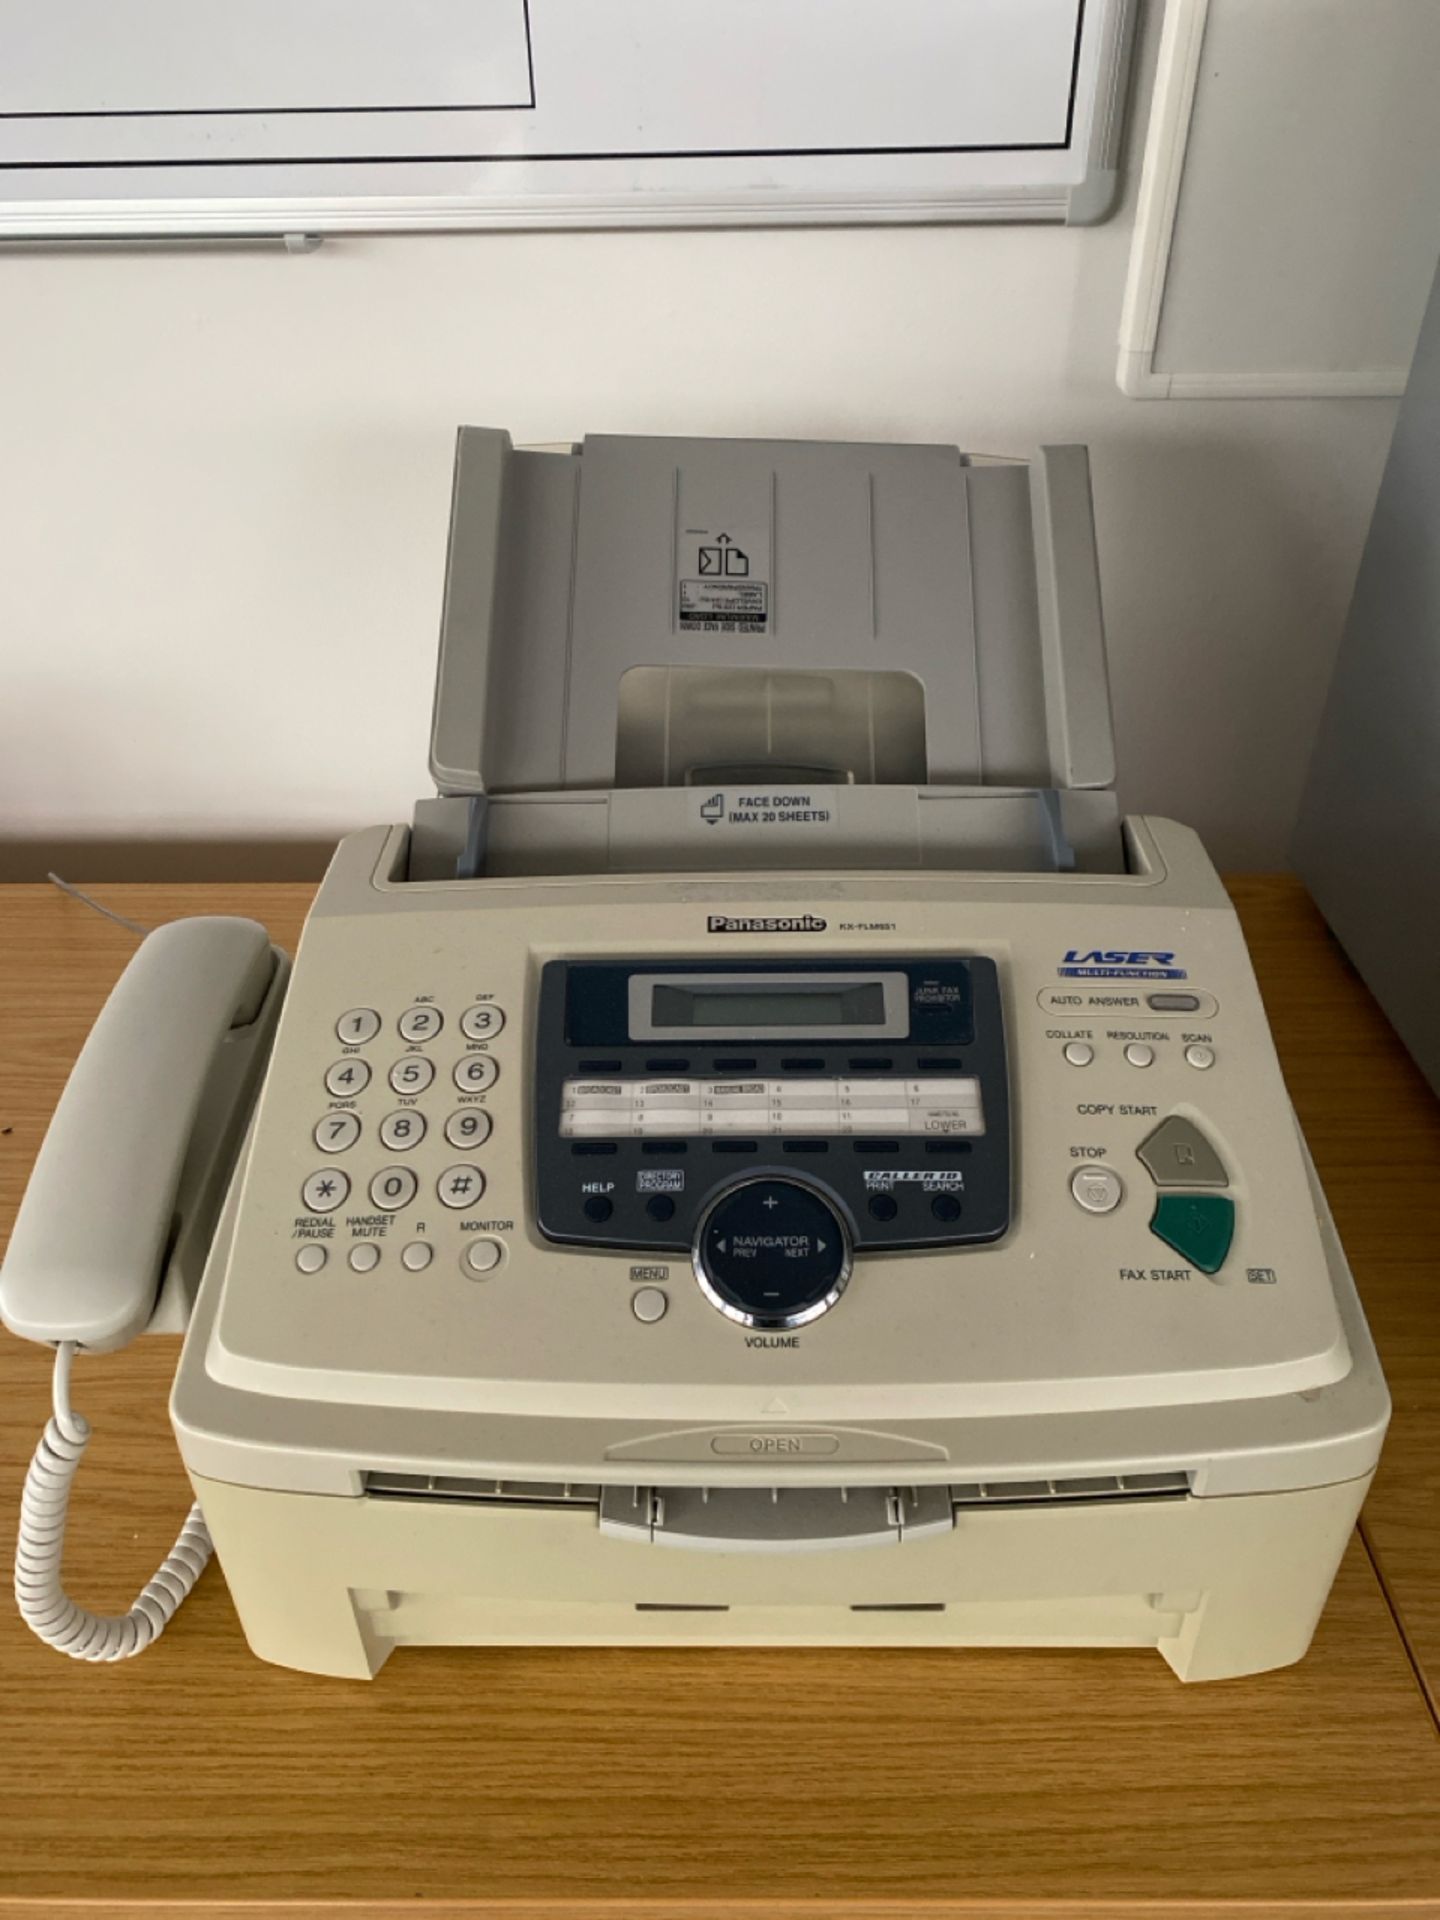 Panasonic KX-FLM651 Fax Machine - Image 2 of 5